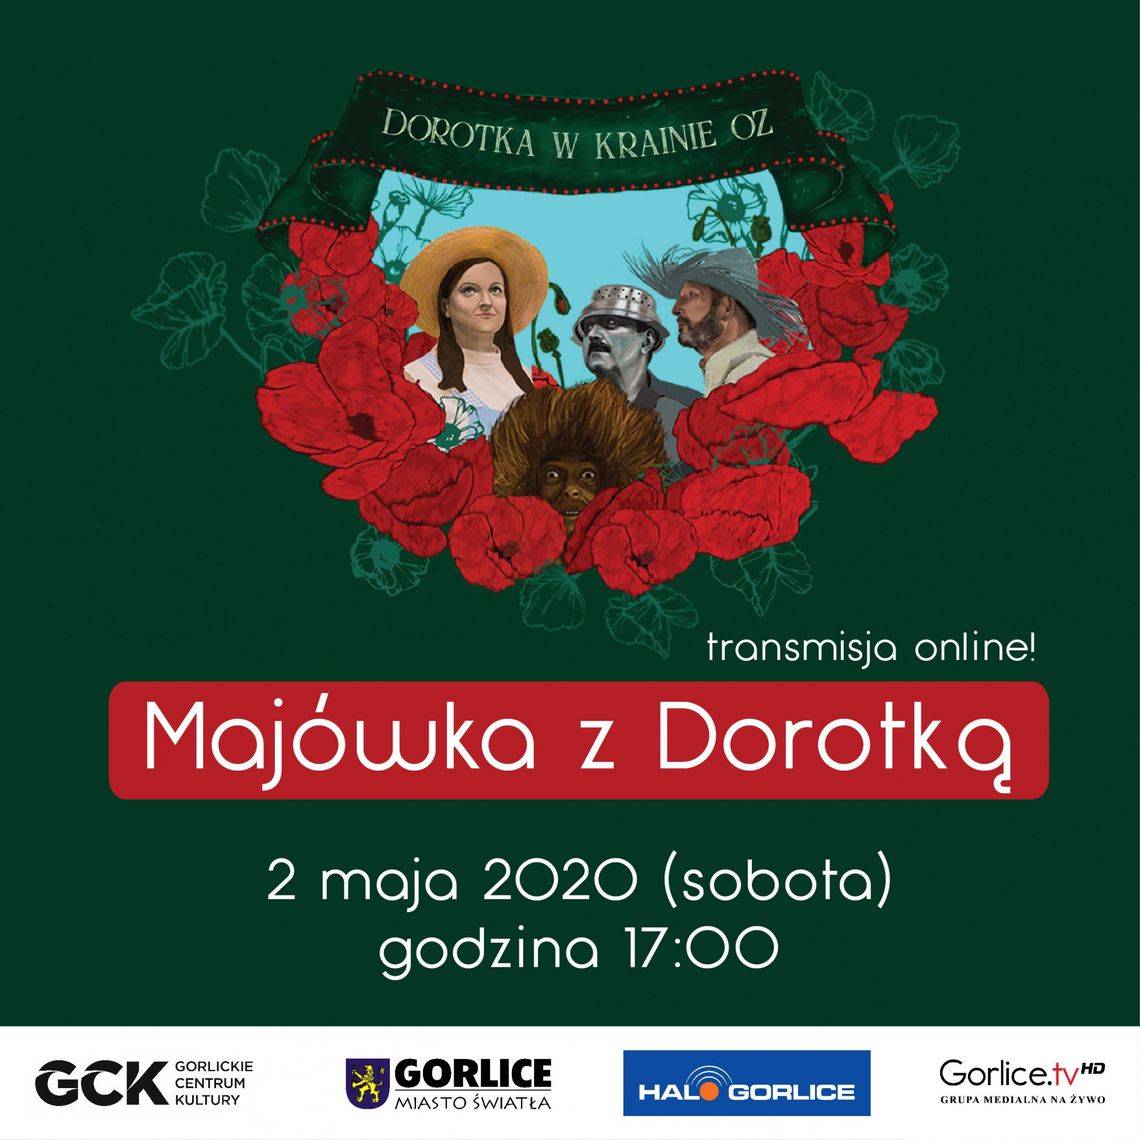 "Majówka z Dorotką" w Gorlice.tv!